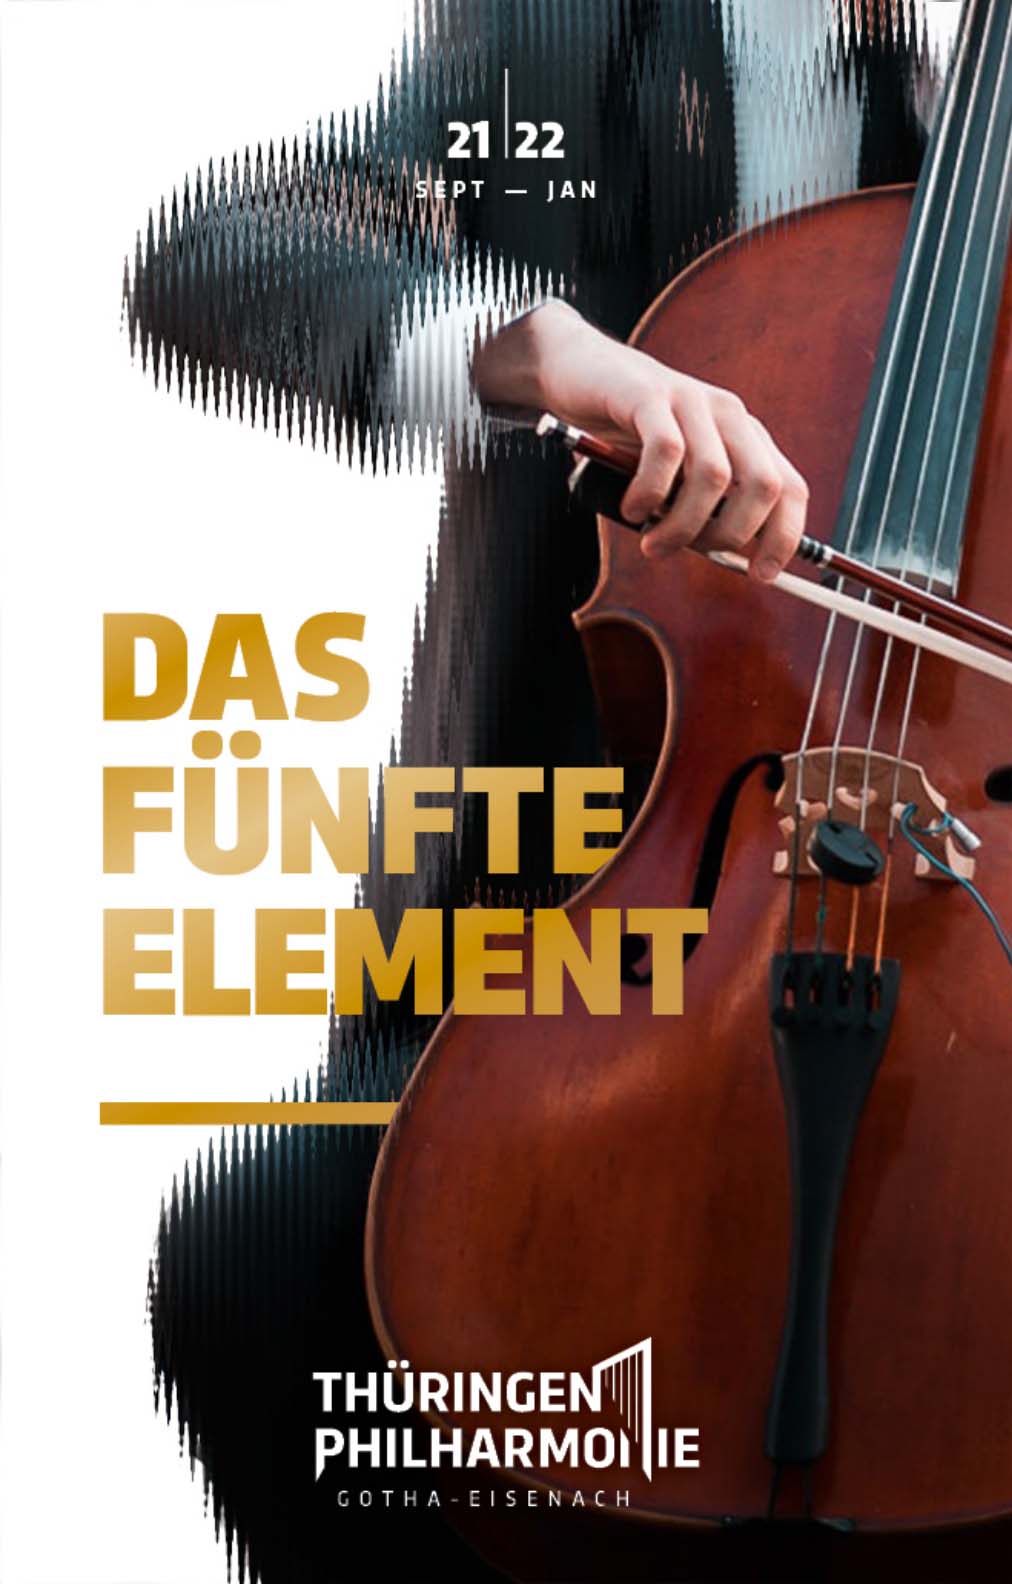 Poster draft visualizing musical vibration: shimmering cellist